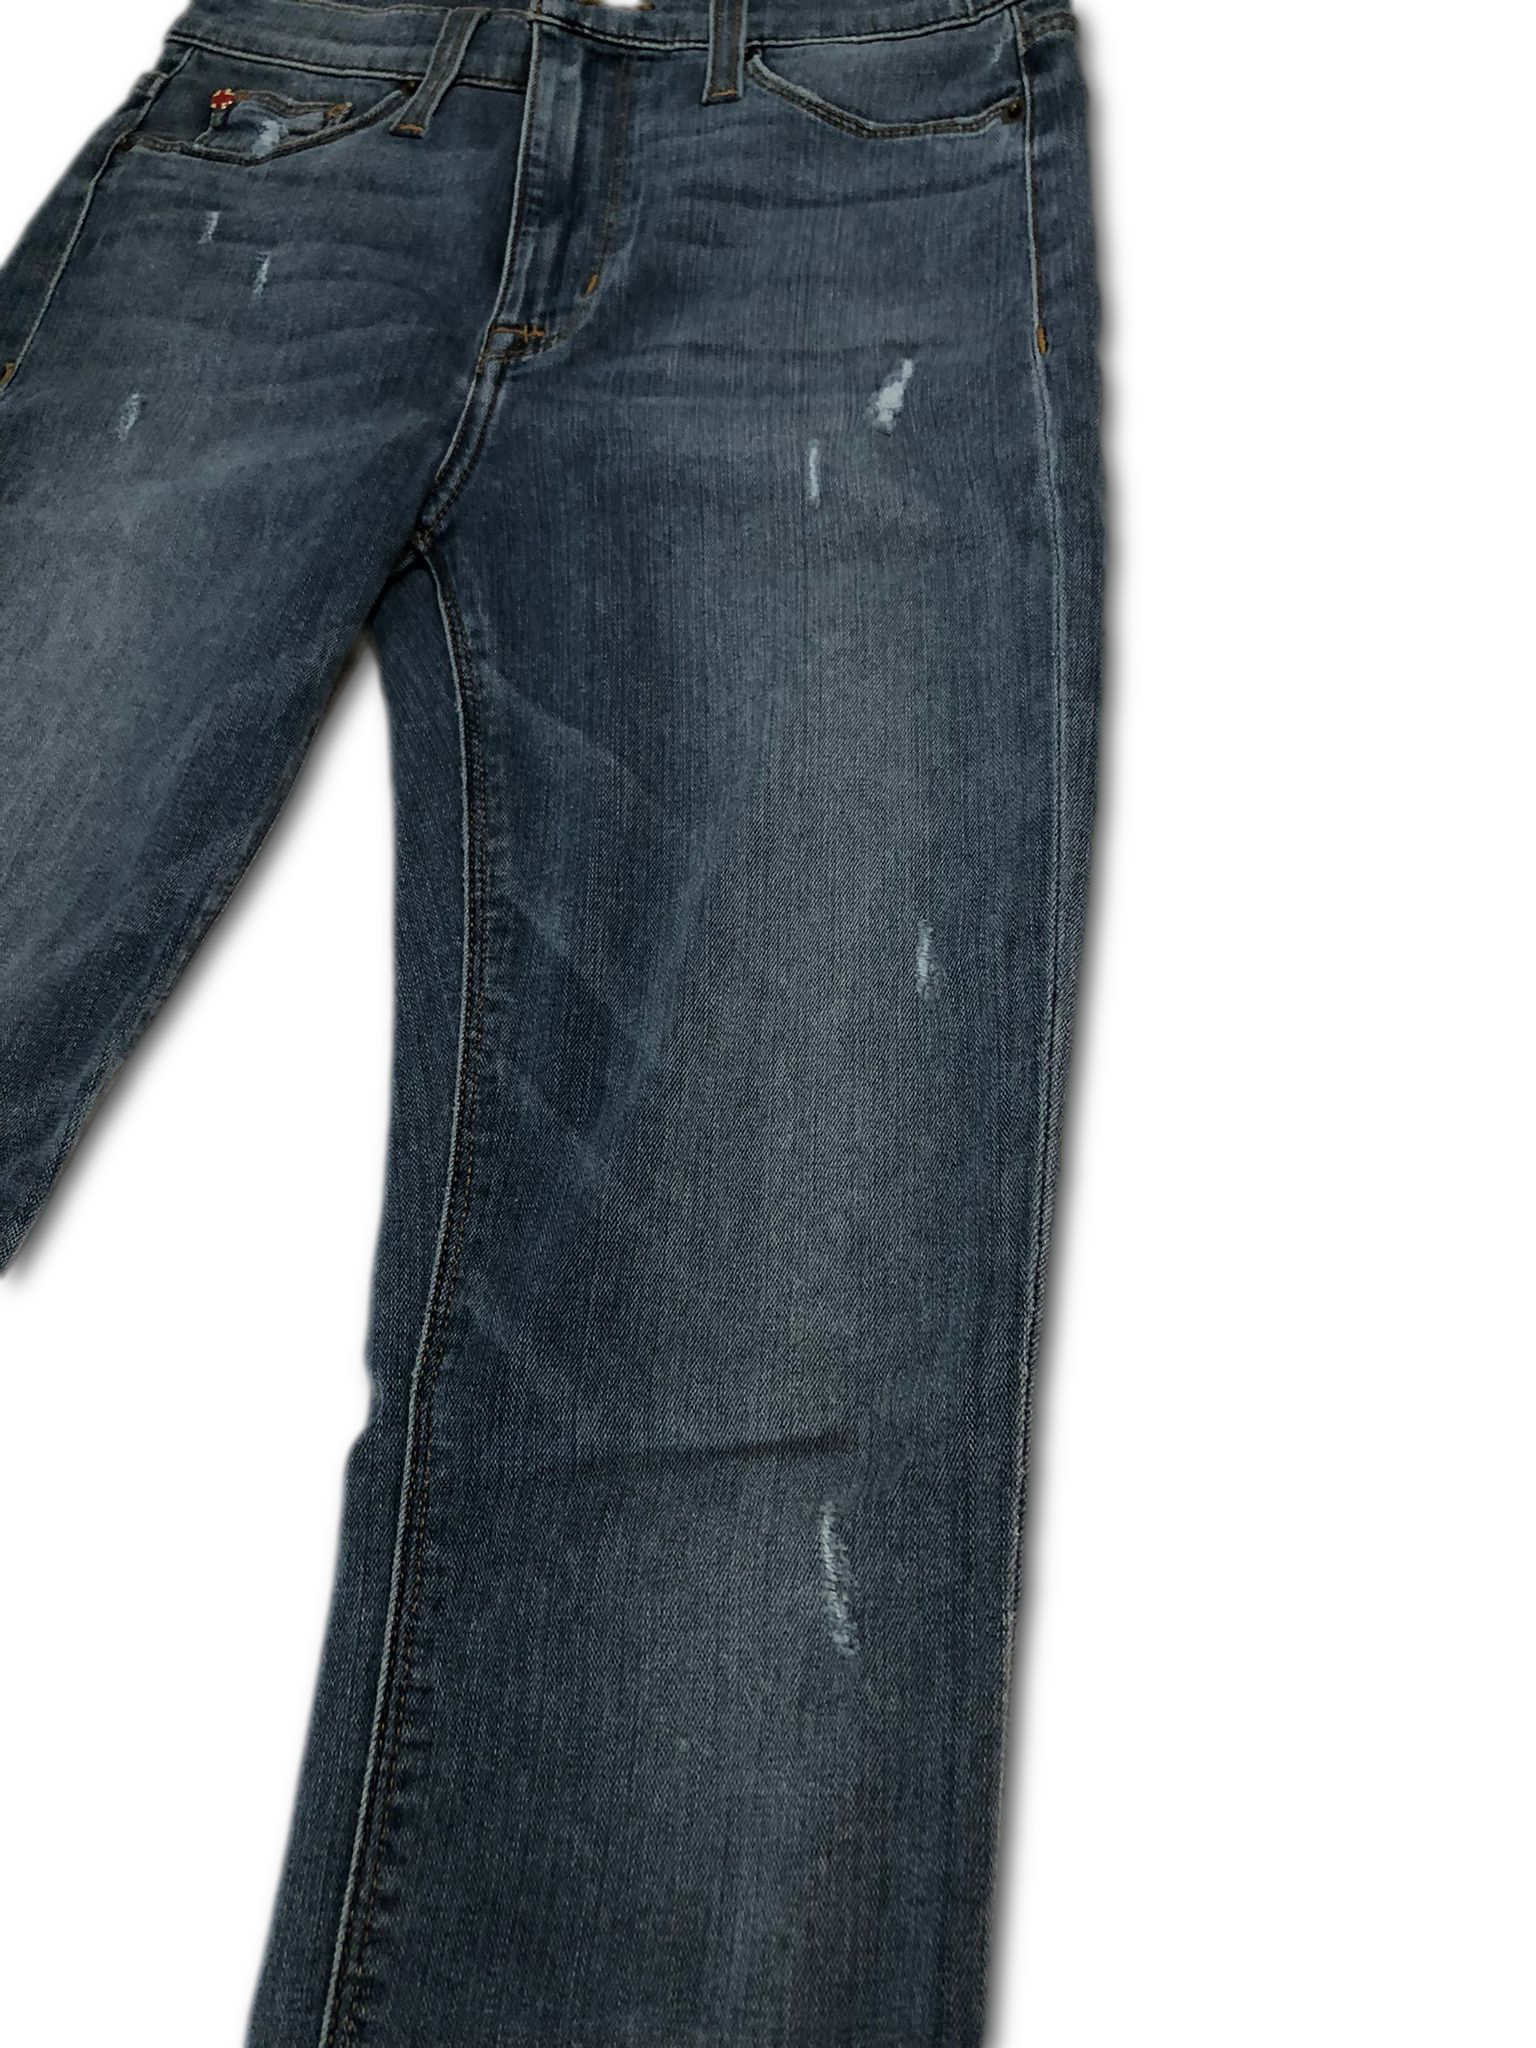 HUDSON Women's Barbara High Waisted Skinny Jeans